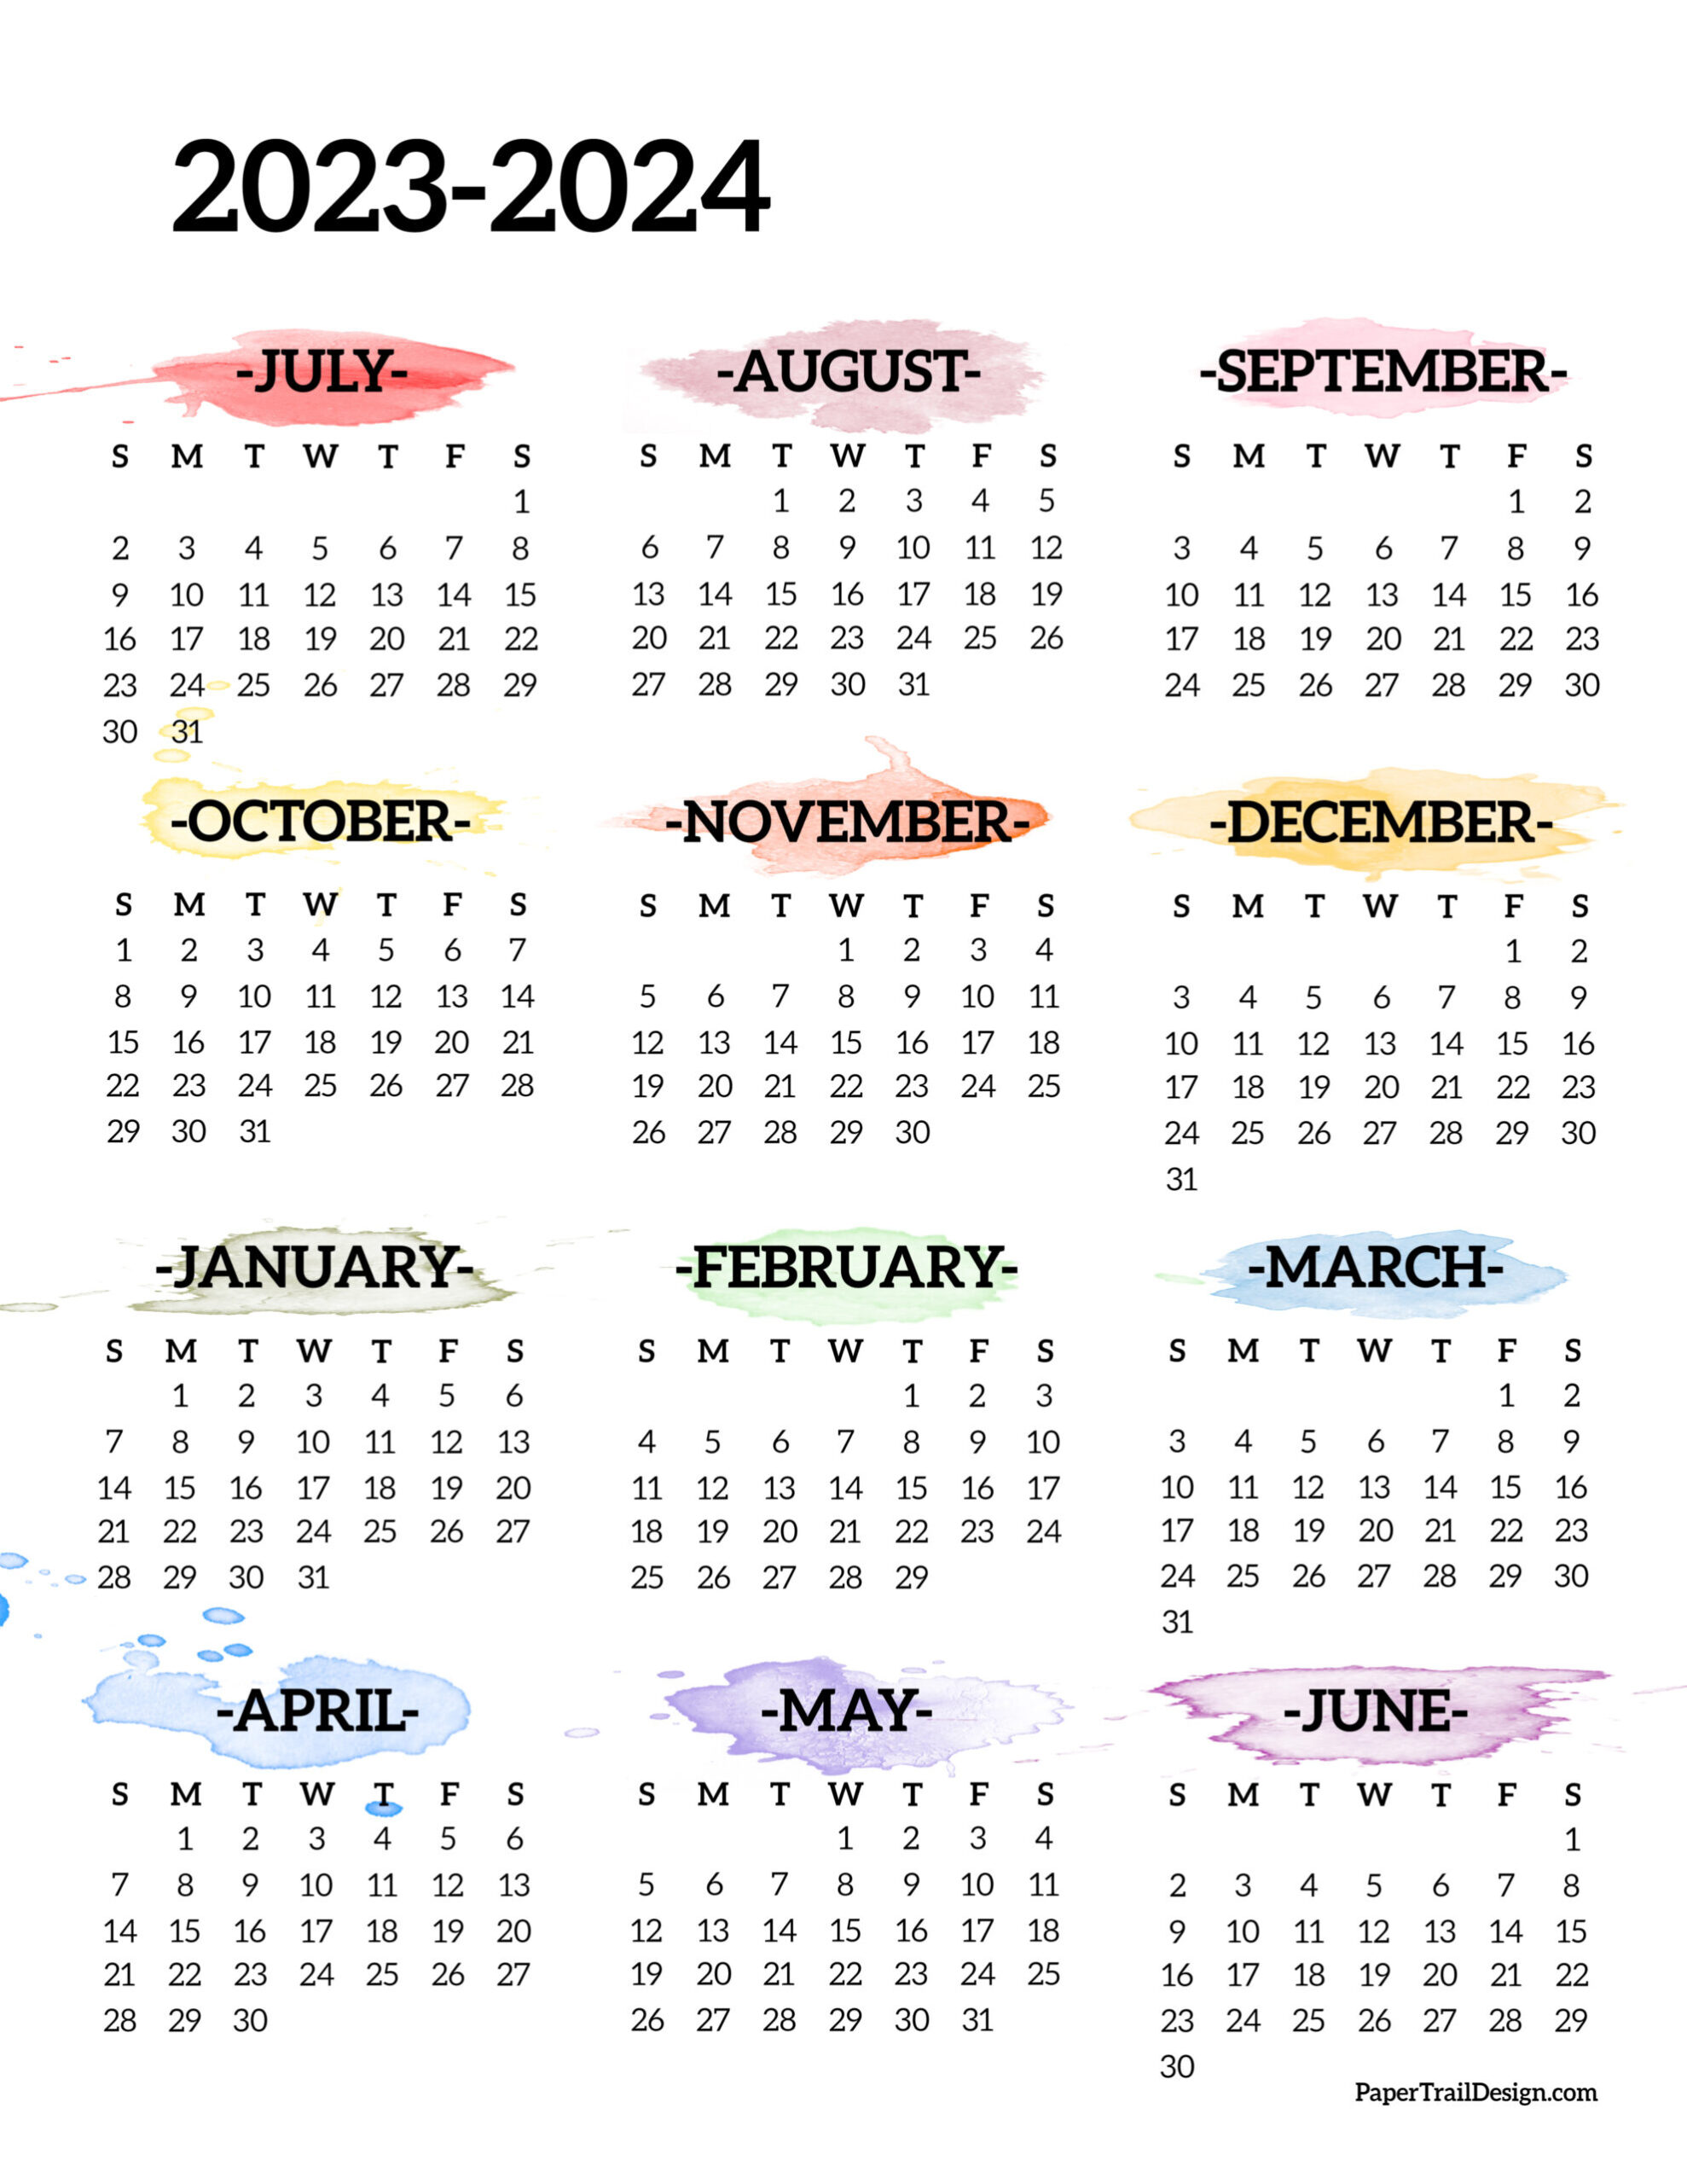 2023-2024 School Year Calendar Free Printable - Paper Trail Design |  Calendar 2024